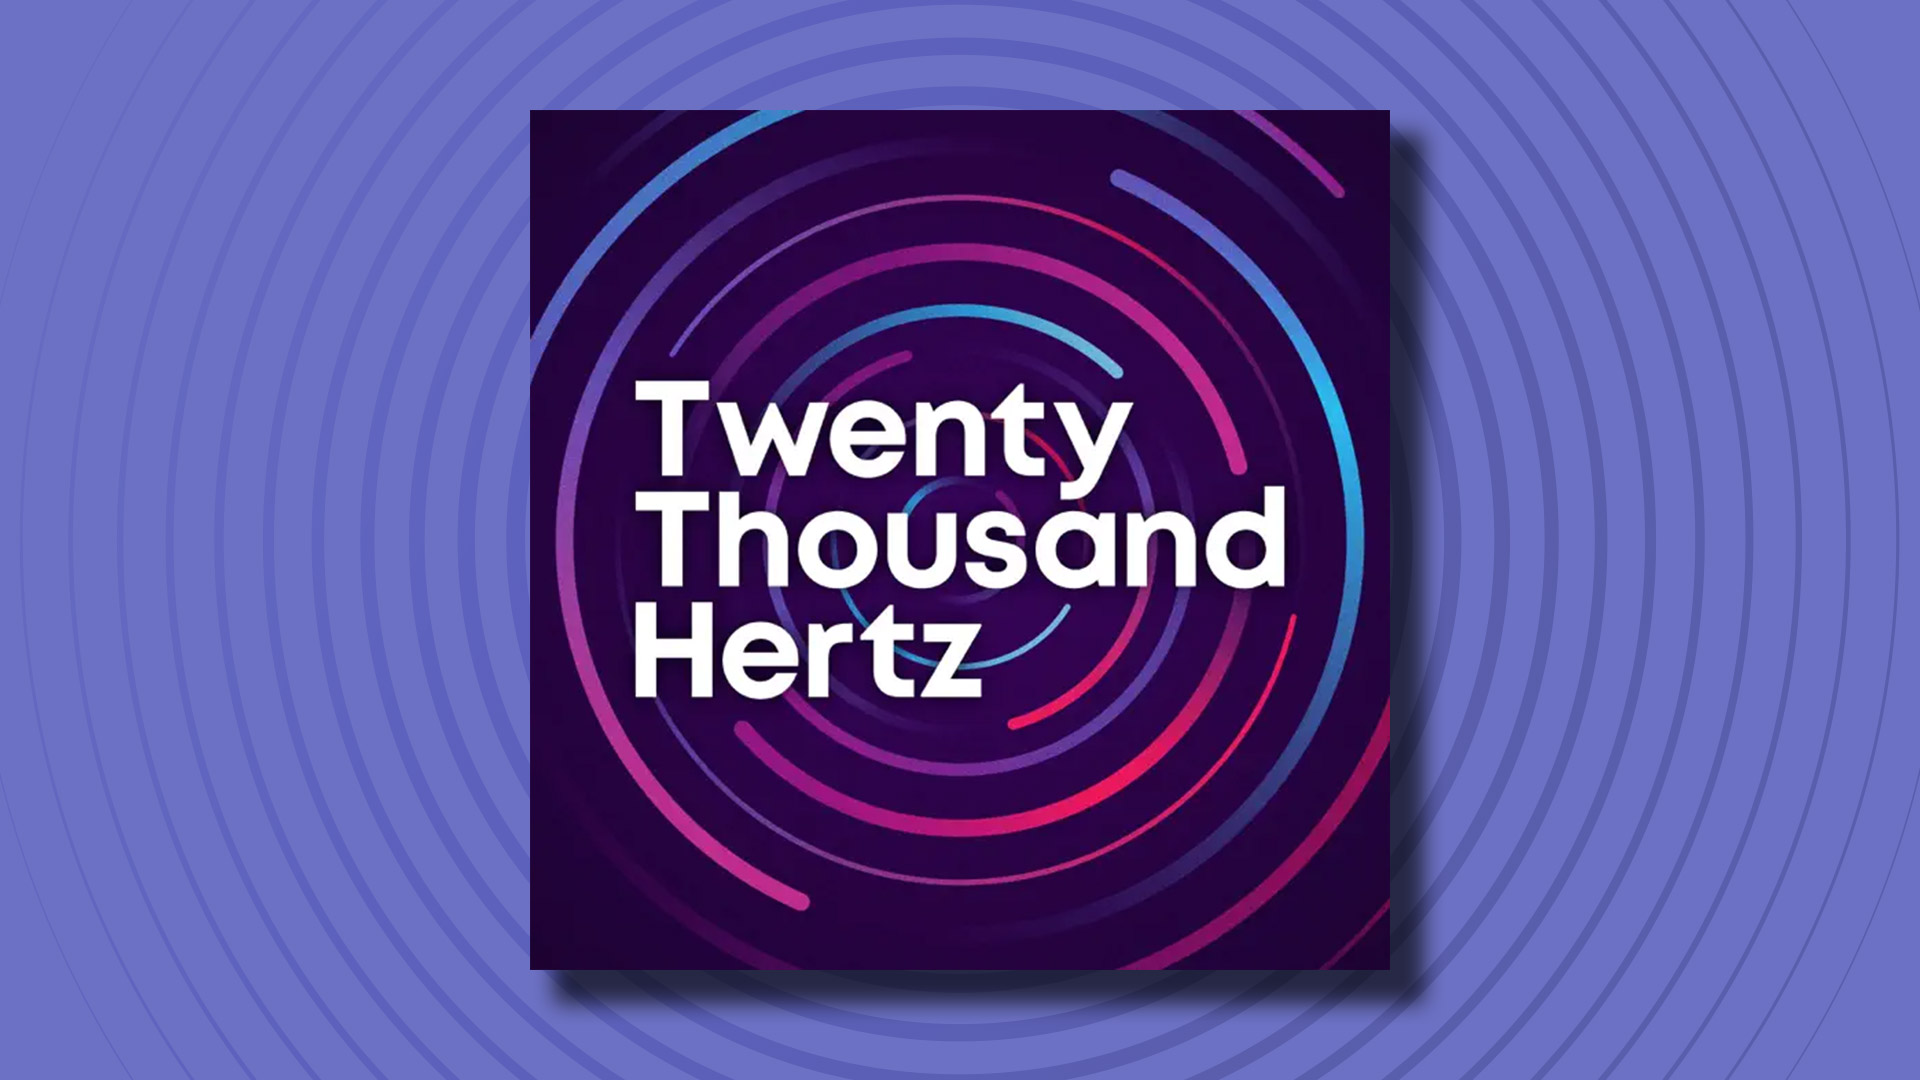 The logo of the Twenty Thousand Hertz podcast on a purple background